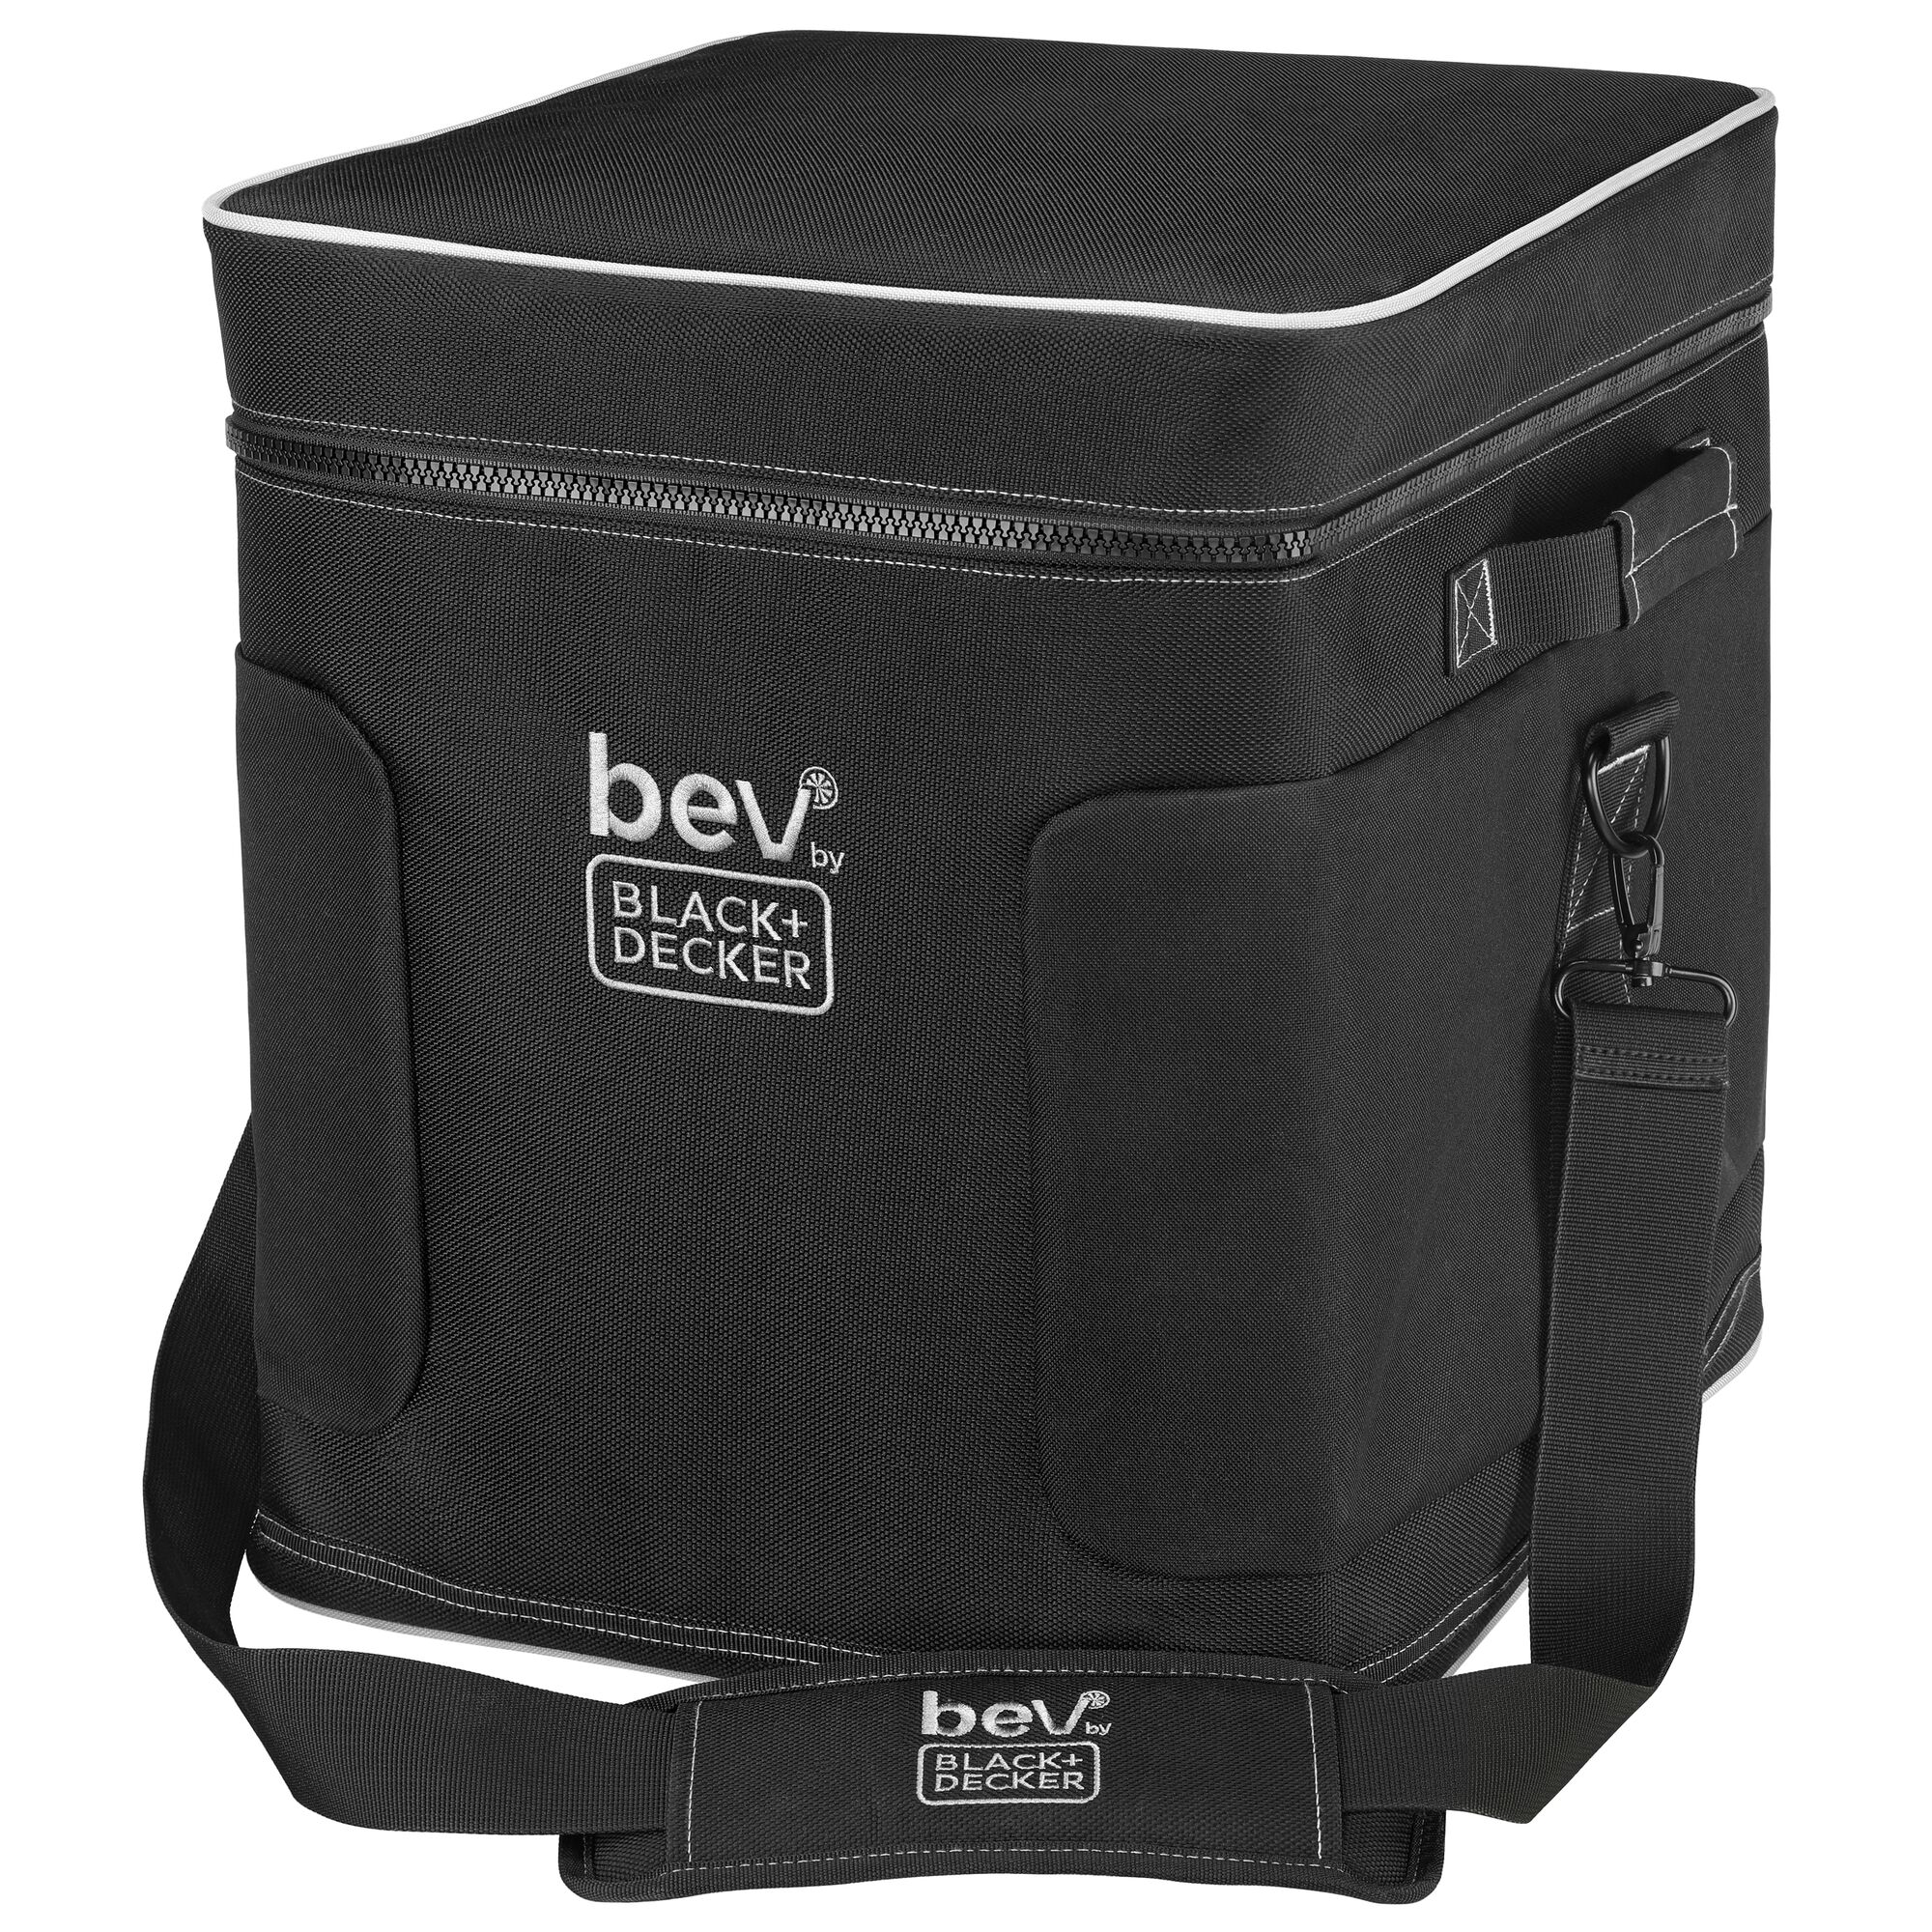 left facing 3/4 view of the bev by BLACK+DECKER™ cocktail maker storage bag